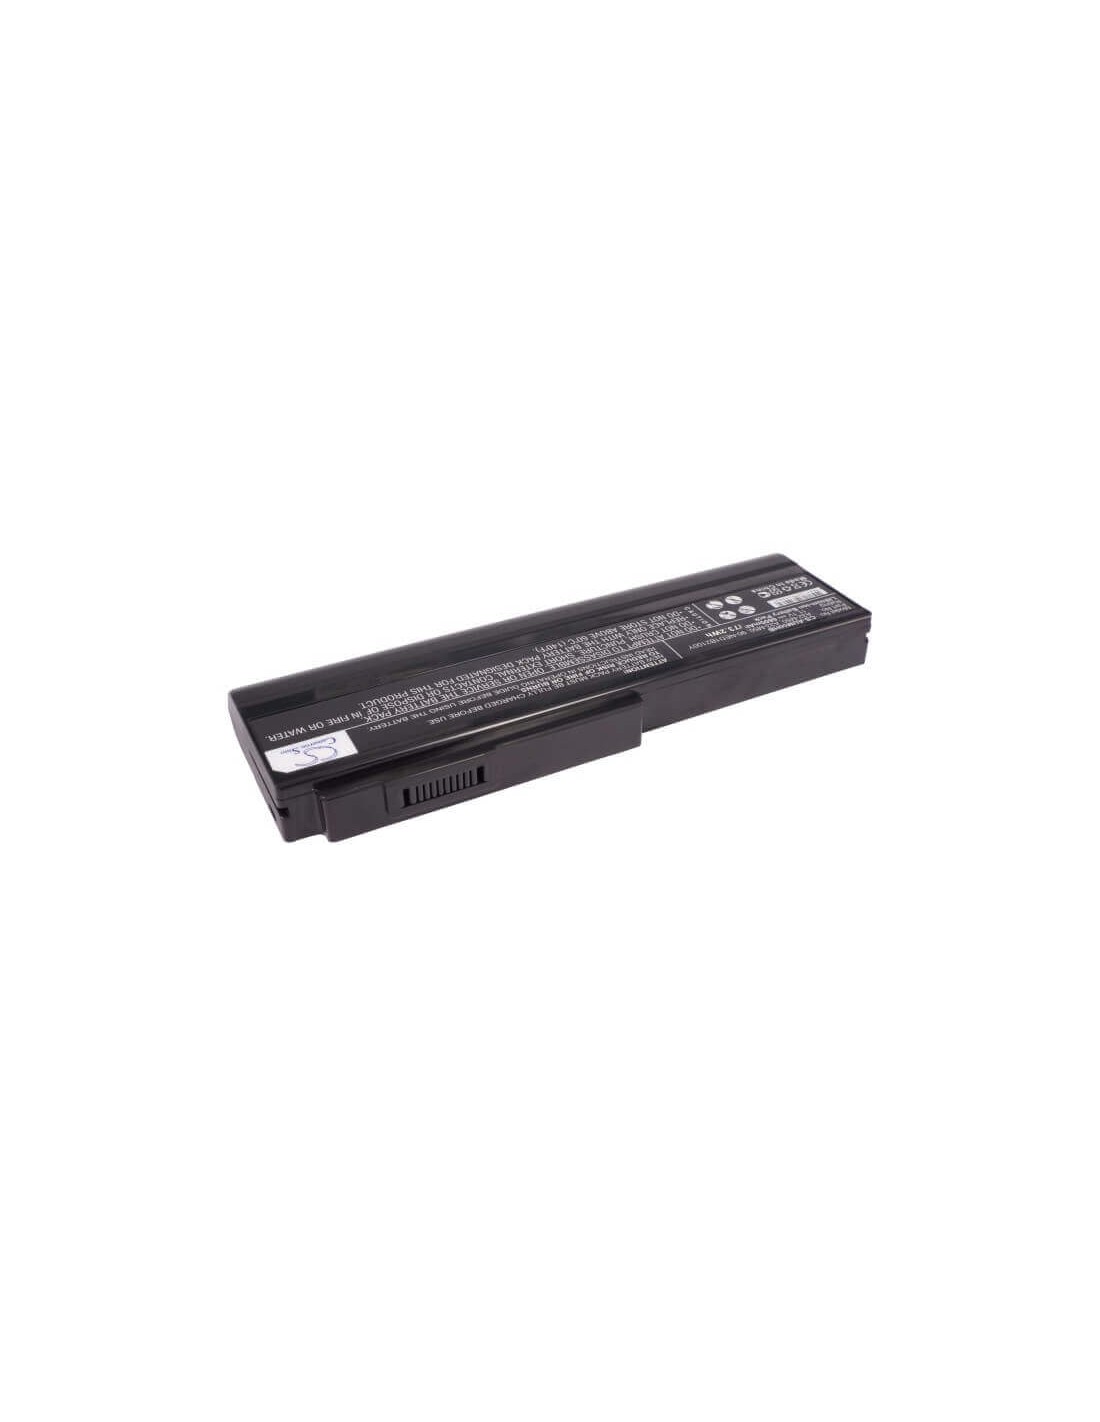 Black Battery for Asus M50, M51, M50s 11.1V, 6600mAh - 73.26Wh